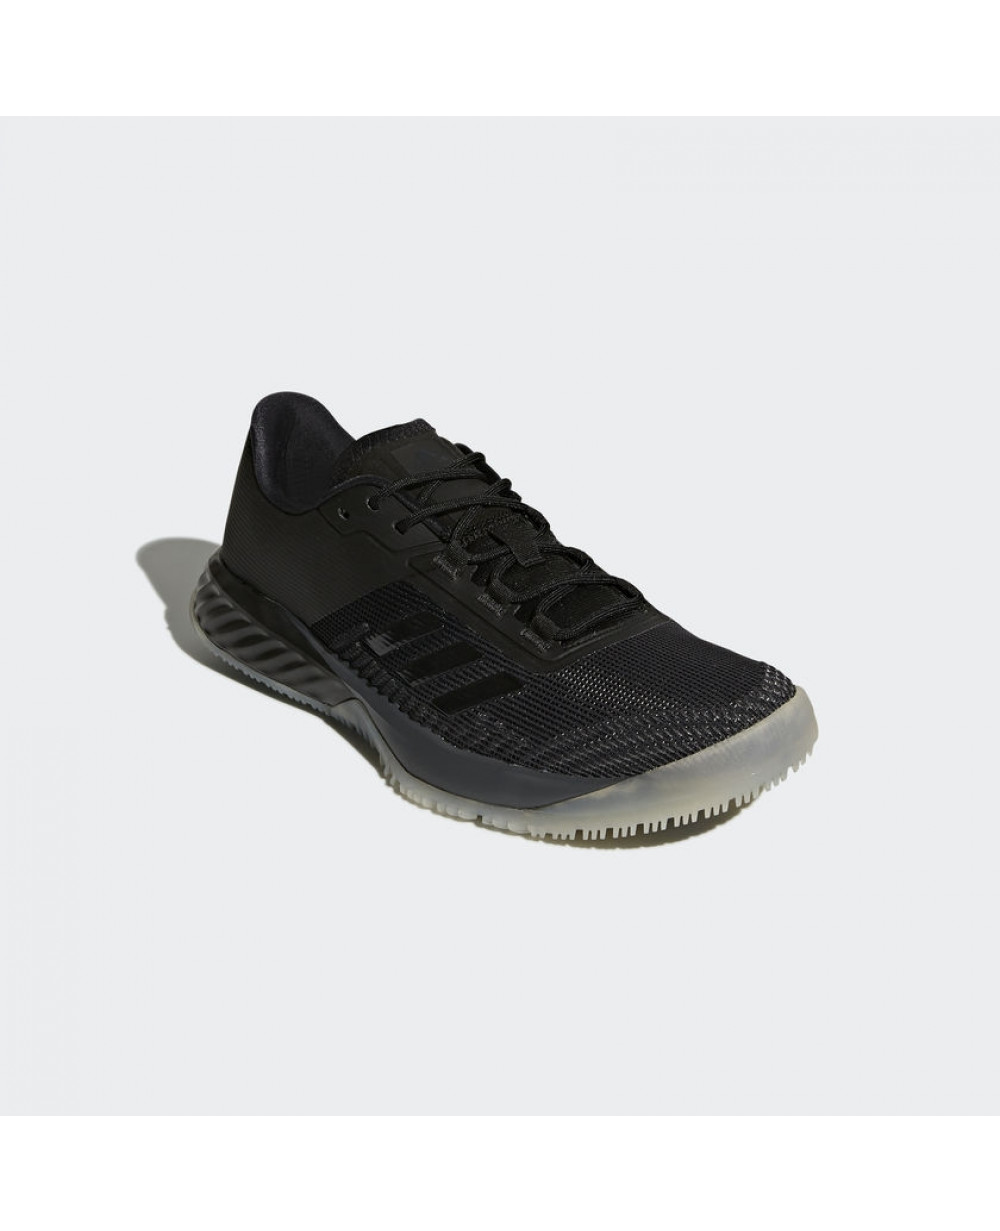 futuro fumar impaciente Adidas Crazy Fast Trainer Training Shoes For Men CG3102